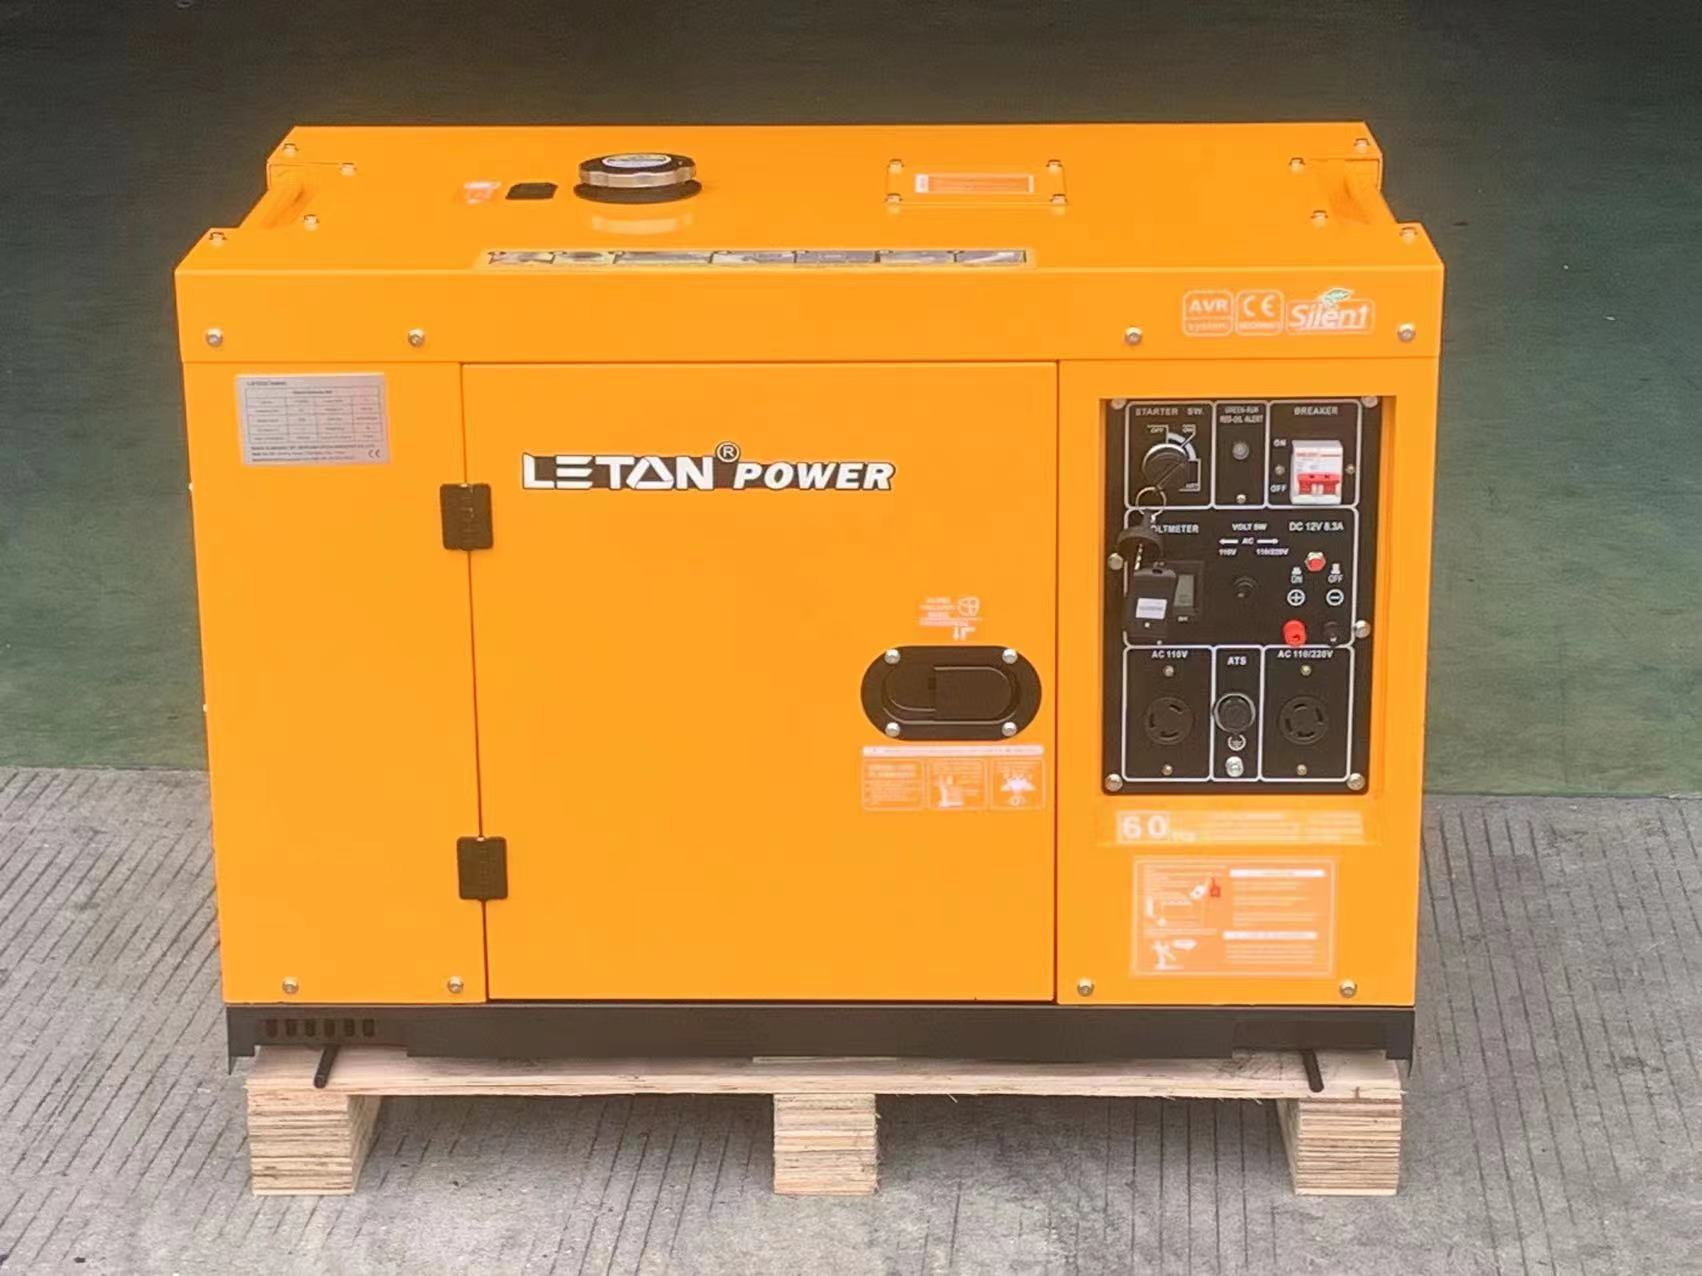 LT1200W super tihi dizel generator set cijena za leton agregat